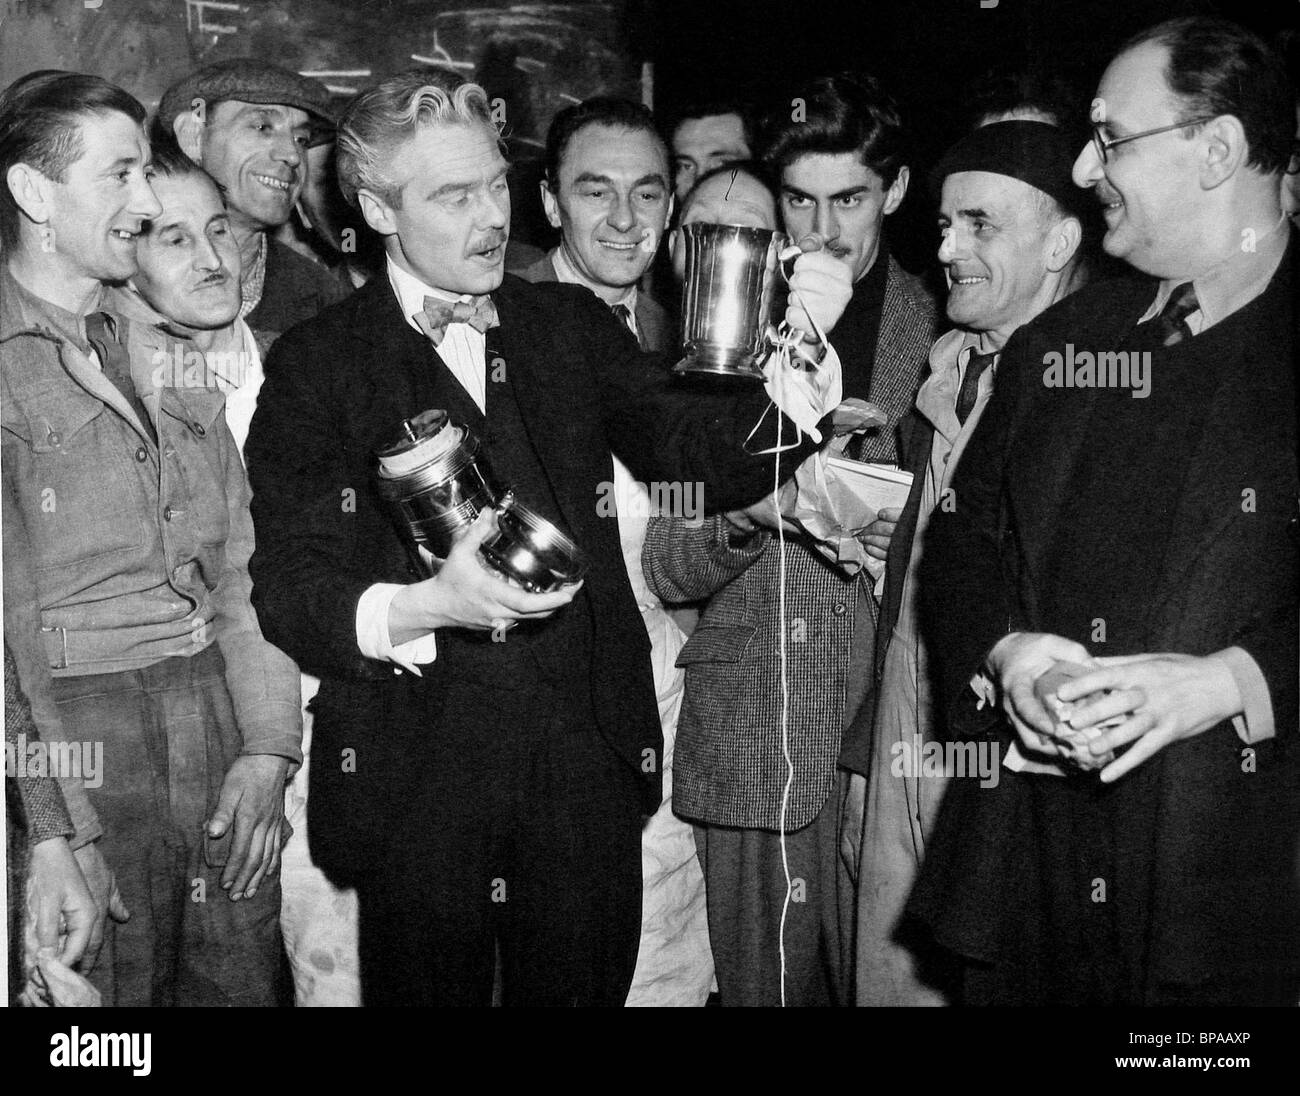 MARIUS GORING, ALEXANDER GALPERSON, FILM CREW PRESENT TANKARD, MR. PERRIN AND MR. TRAILL, 1948 Stock Photo